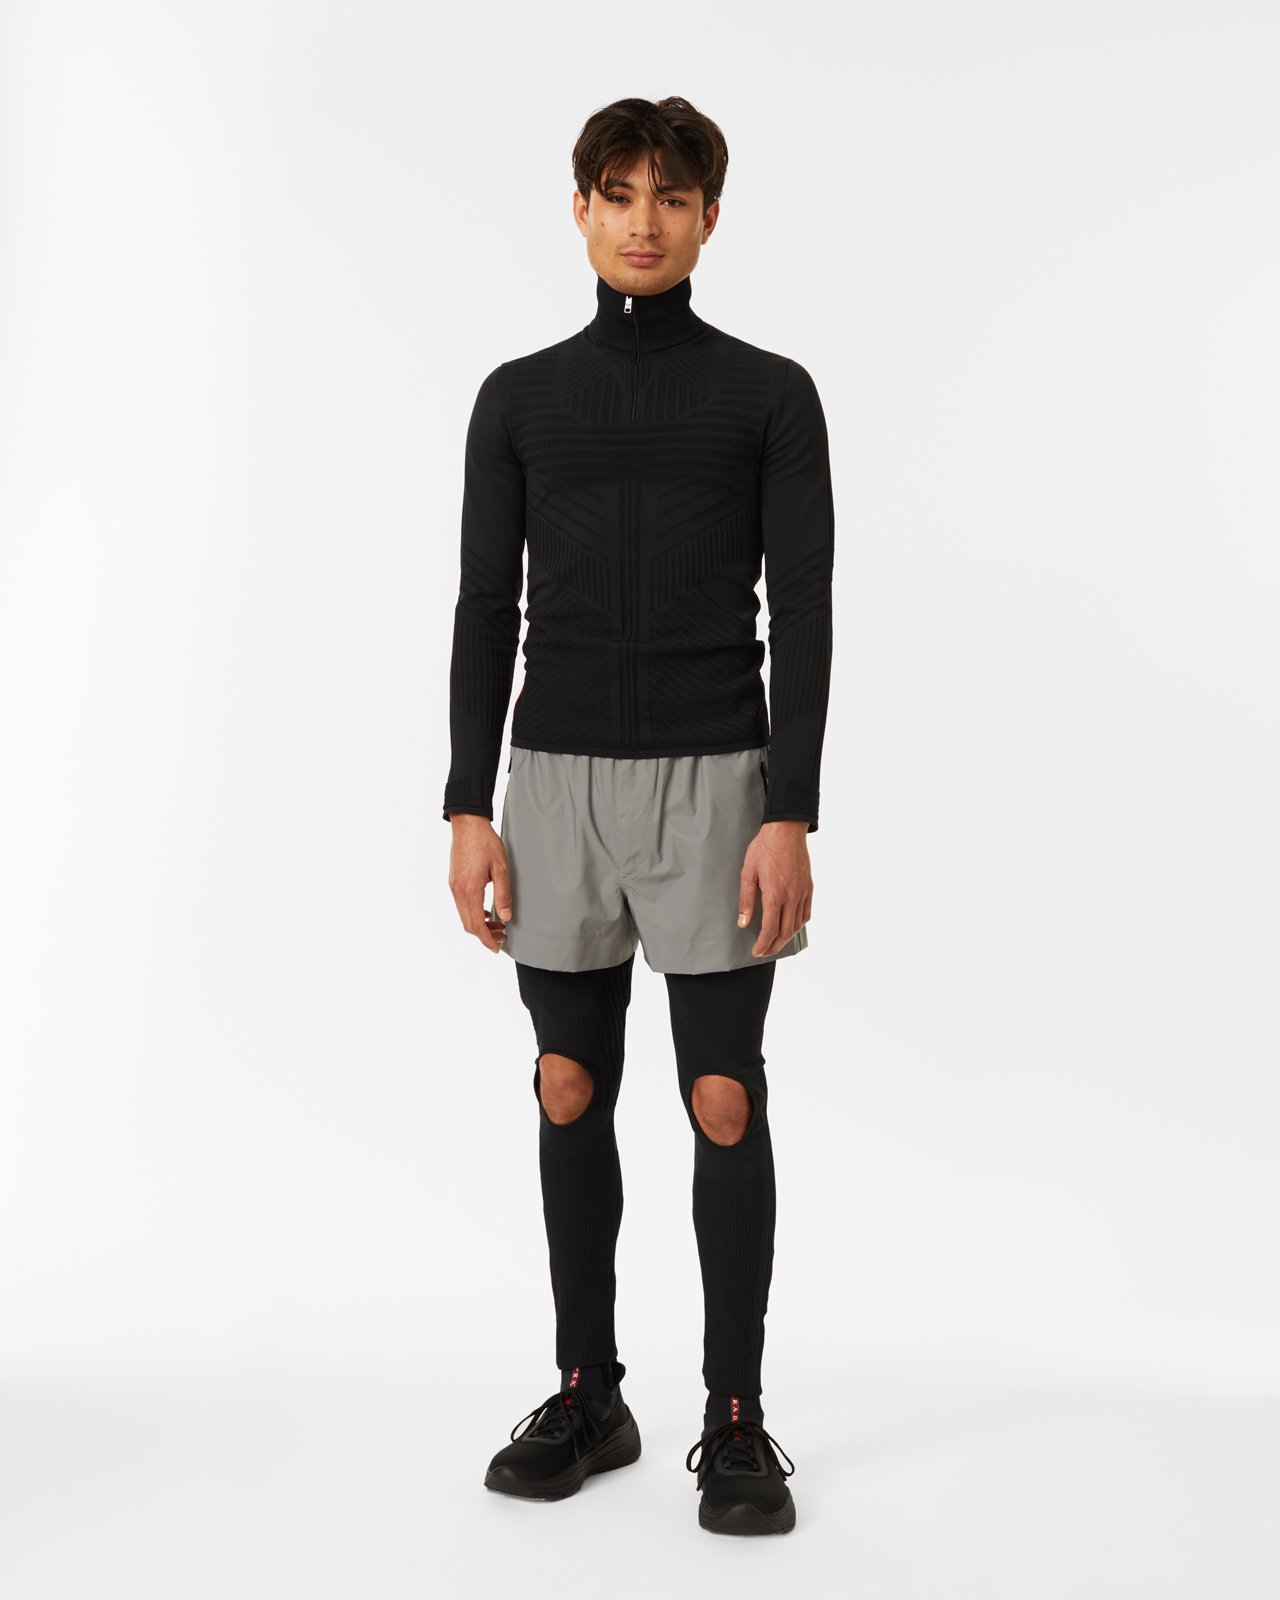 Prada - Knitted Nylon Top - Clothing - Black - Image 5